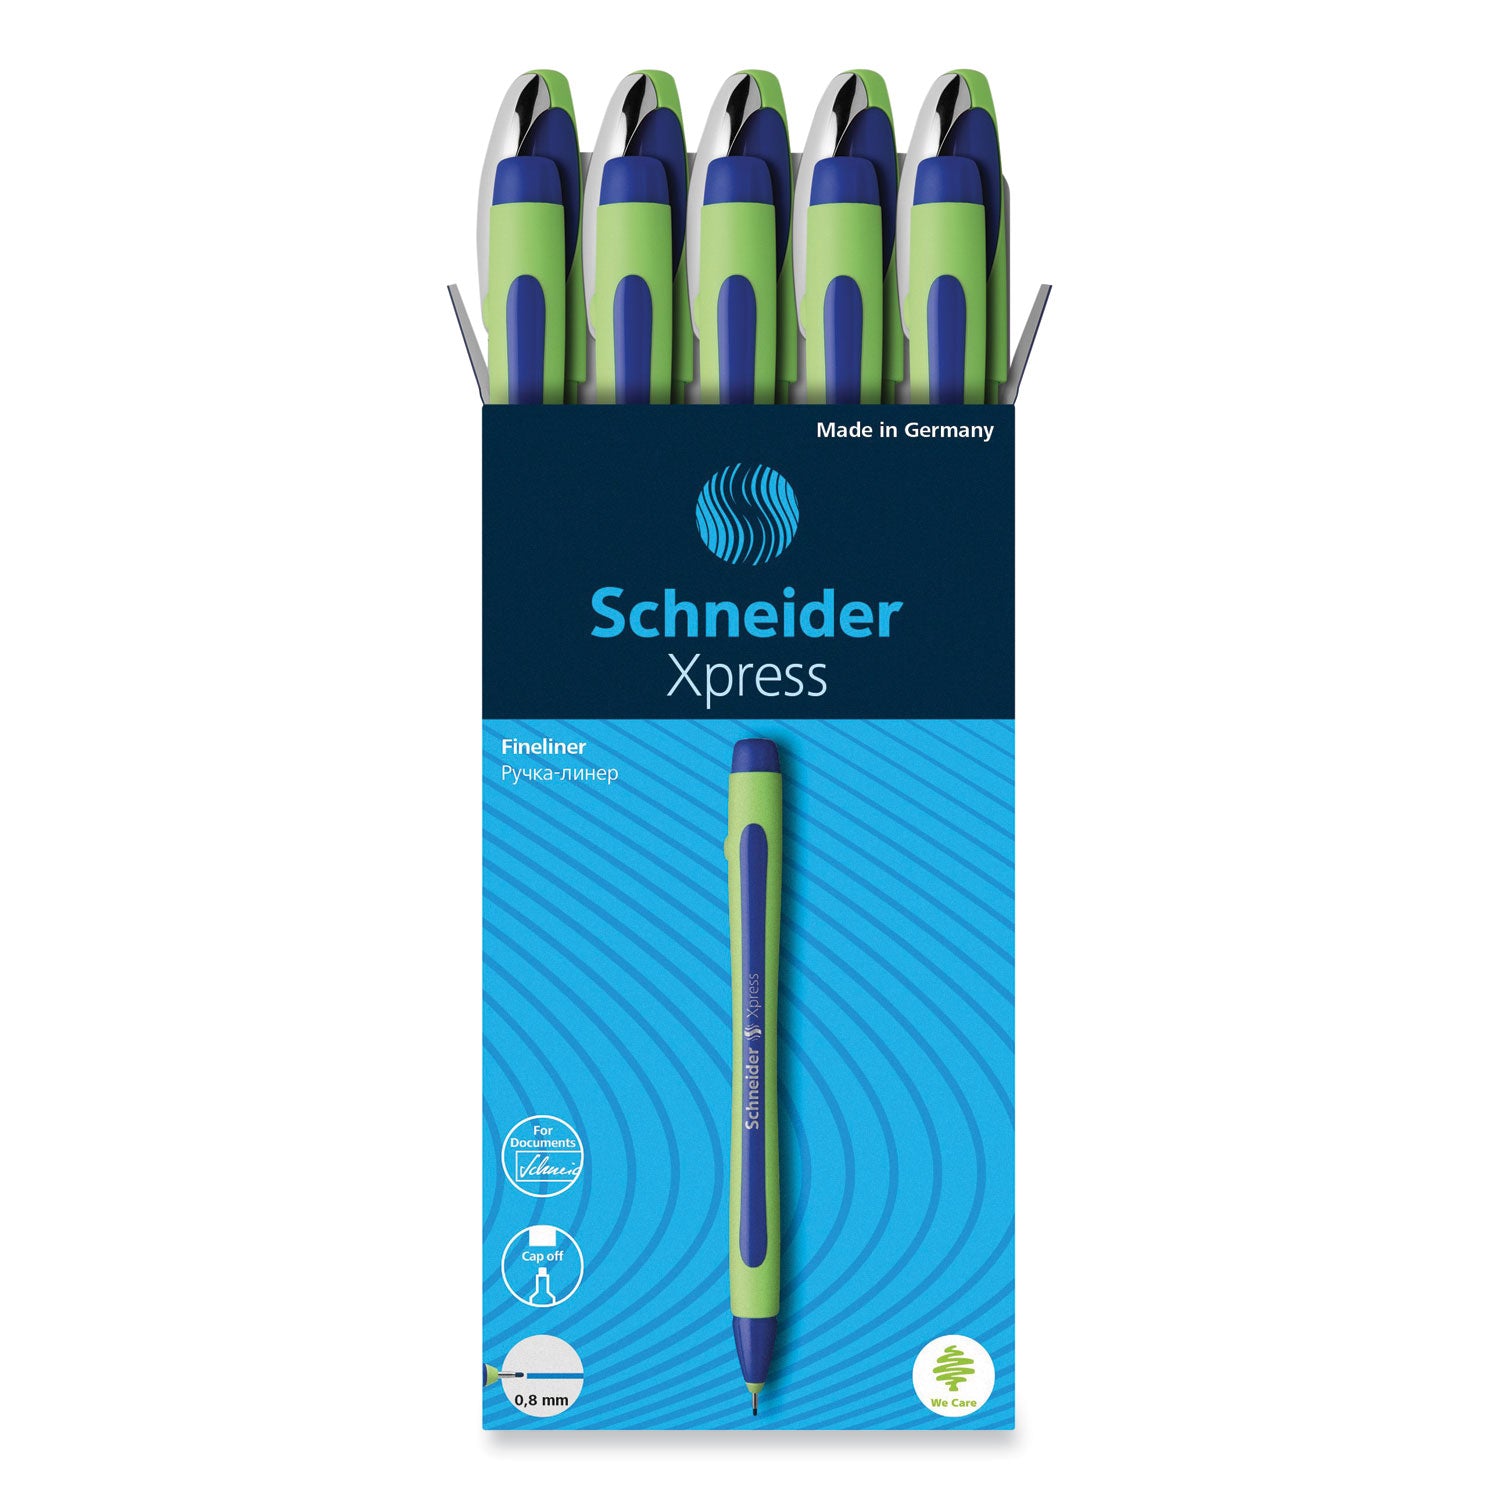 xpress-fineliner-porous-point-pen-stick-medium-08-mm-blue-ink-blue-green-barrel-10-box_red190003 - 1